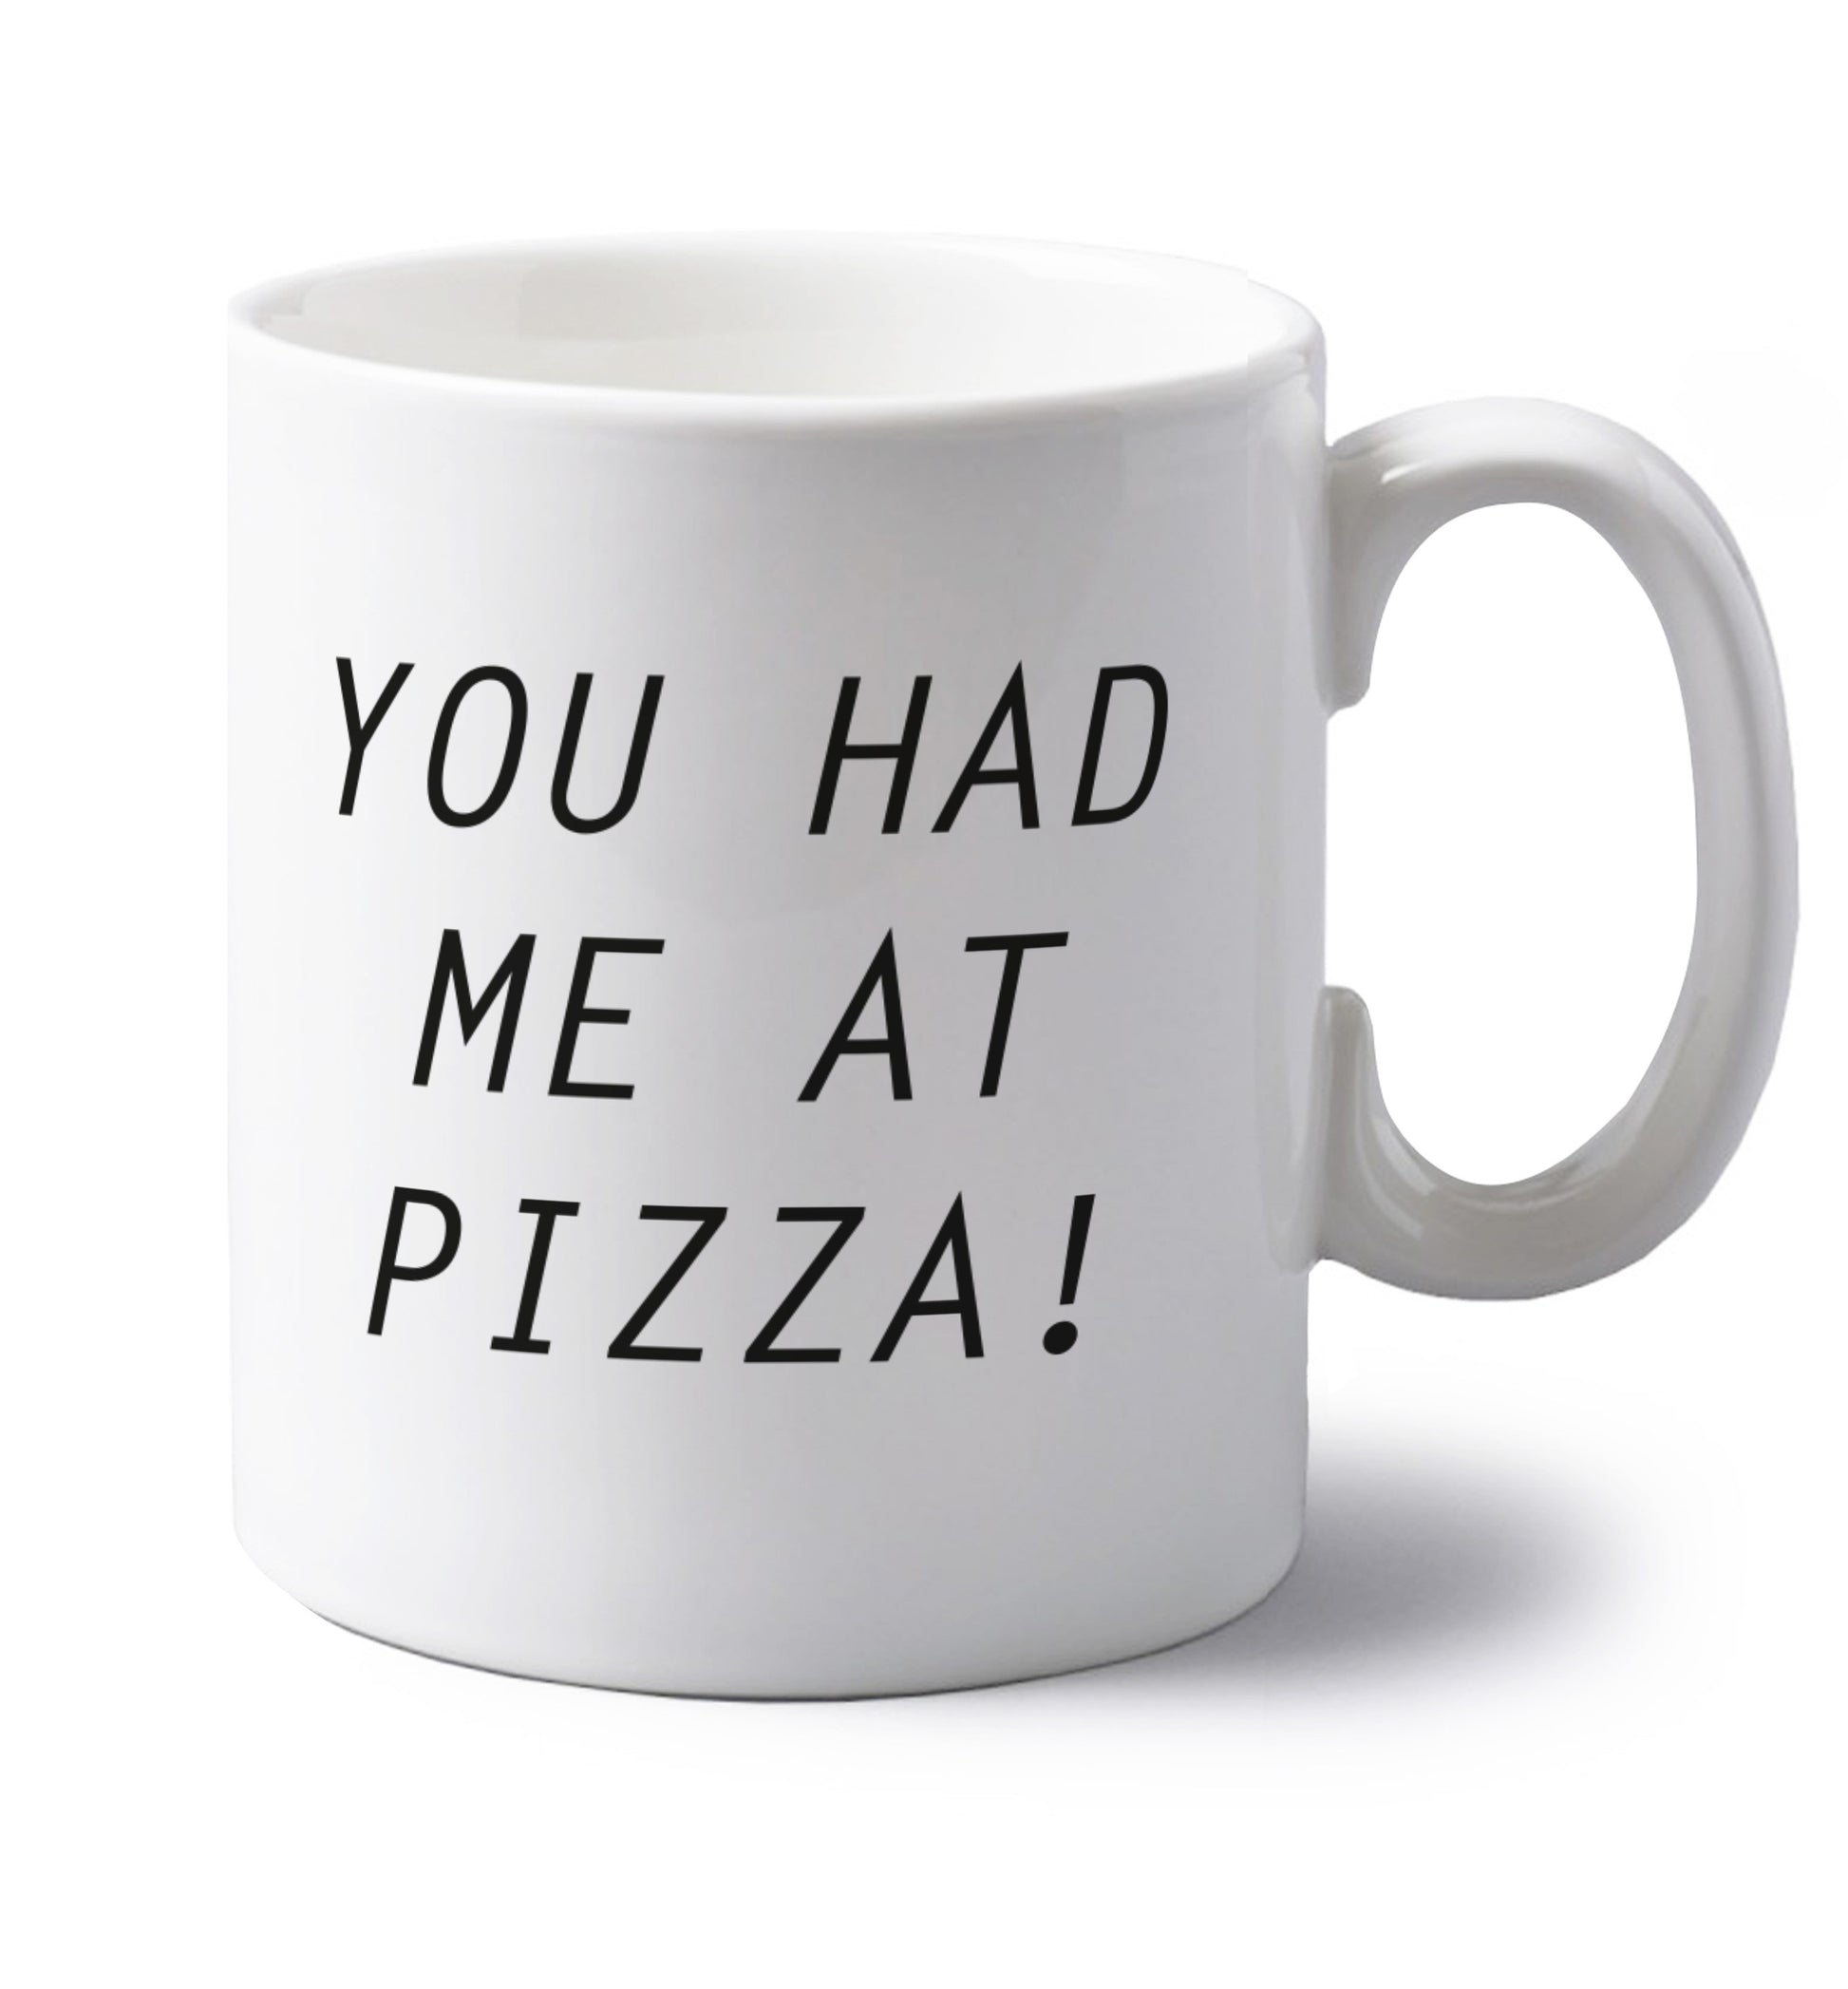 You had me at pizza left handed white ceramic mug 